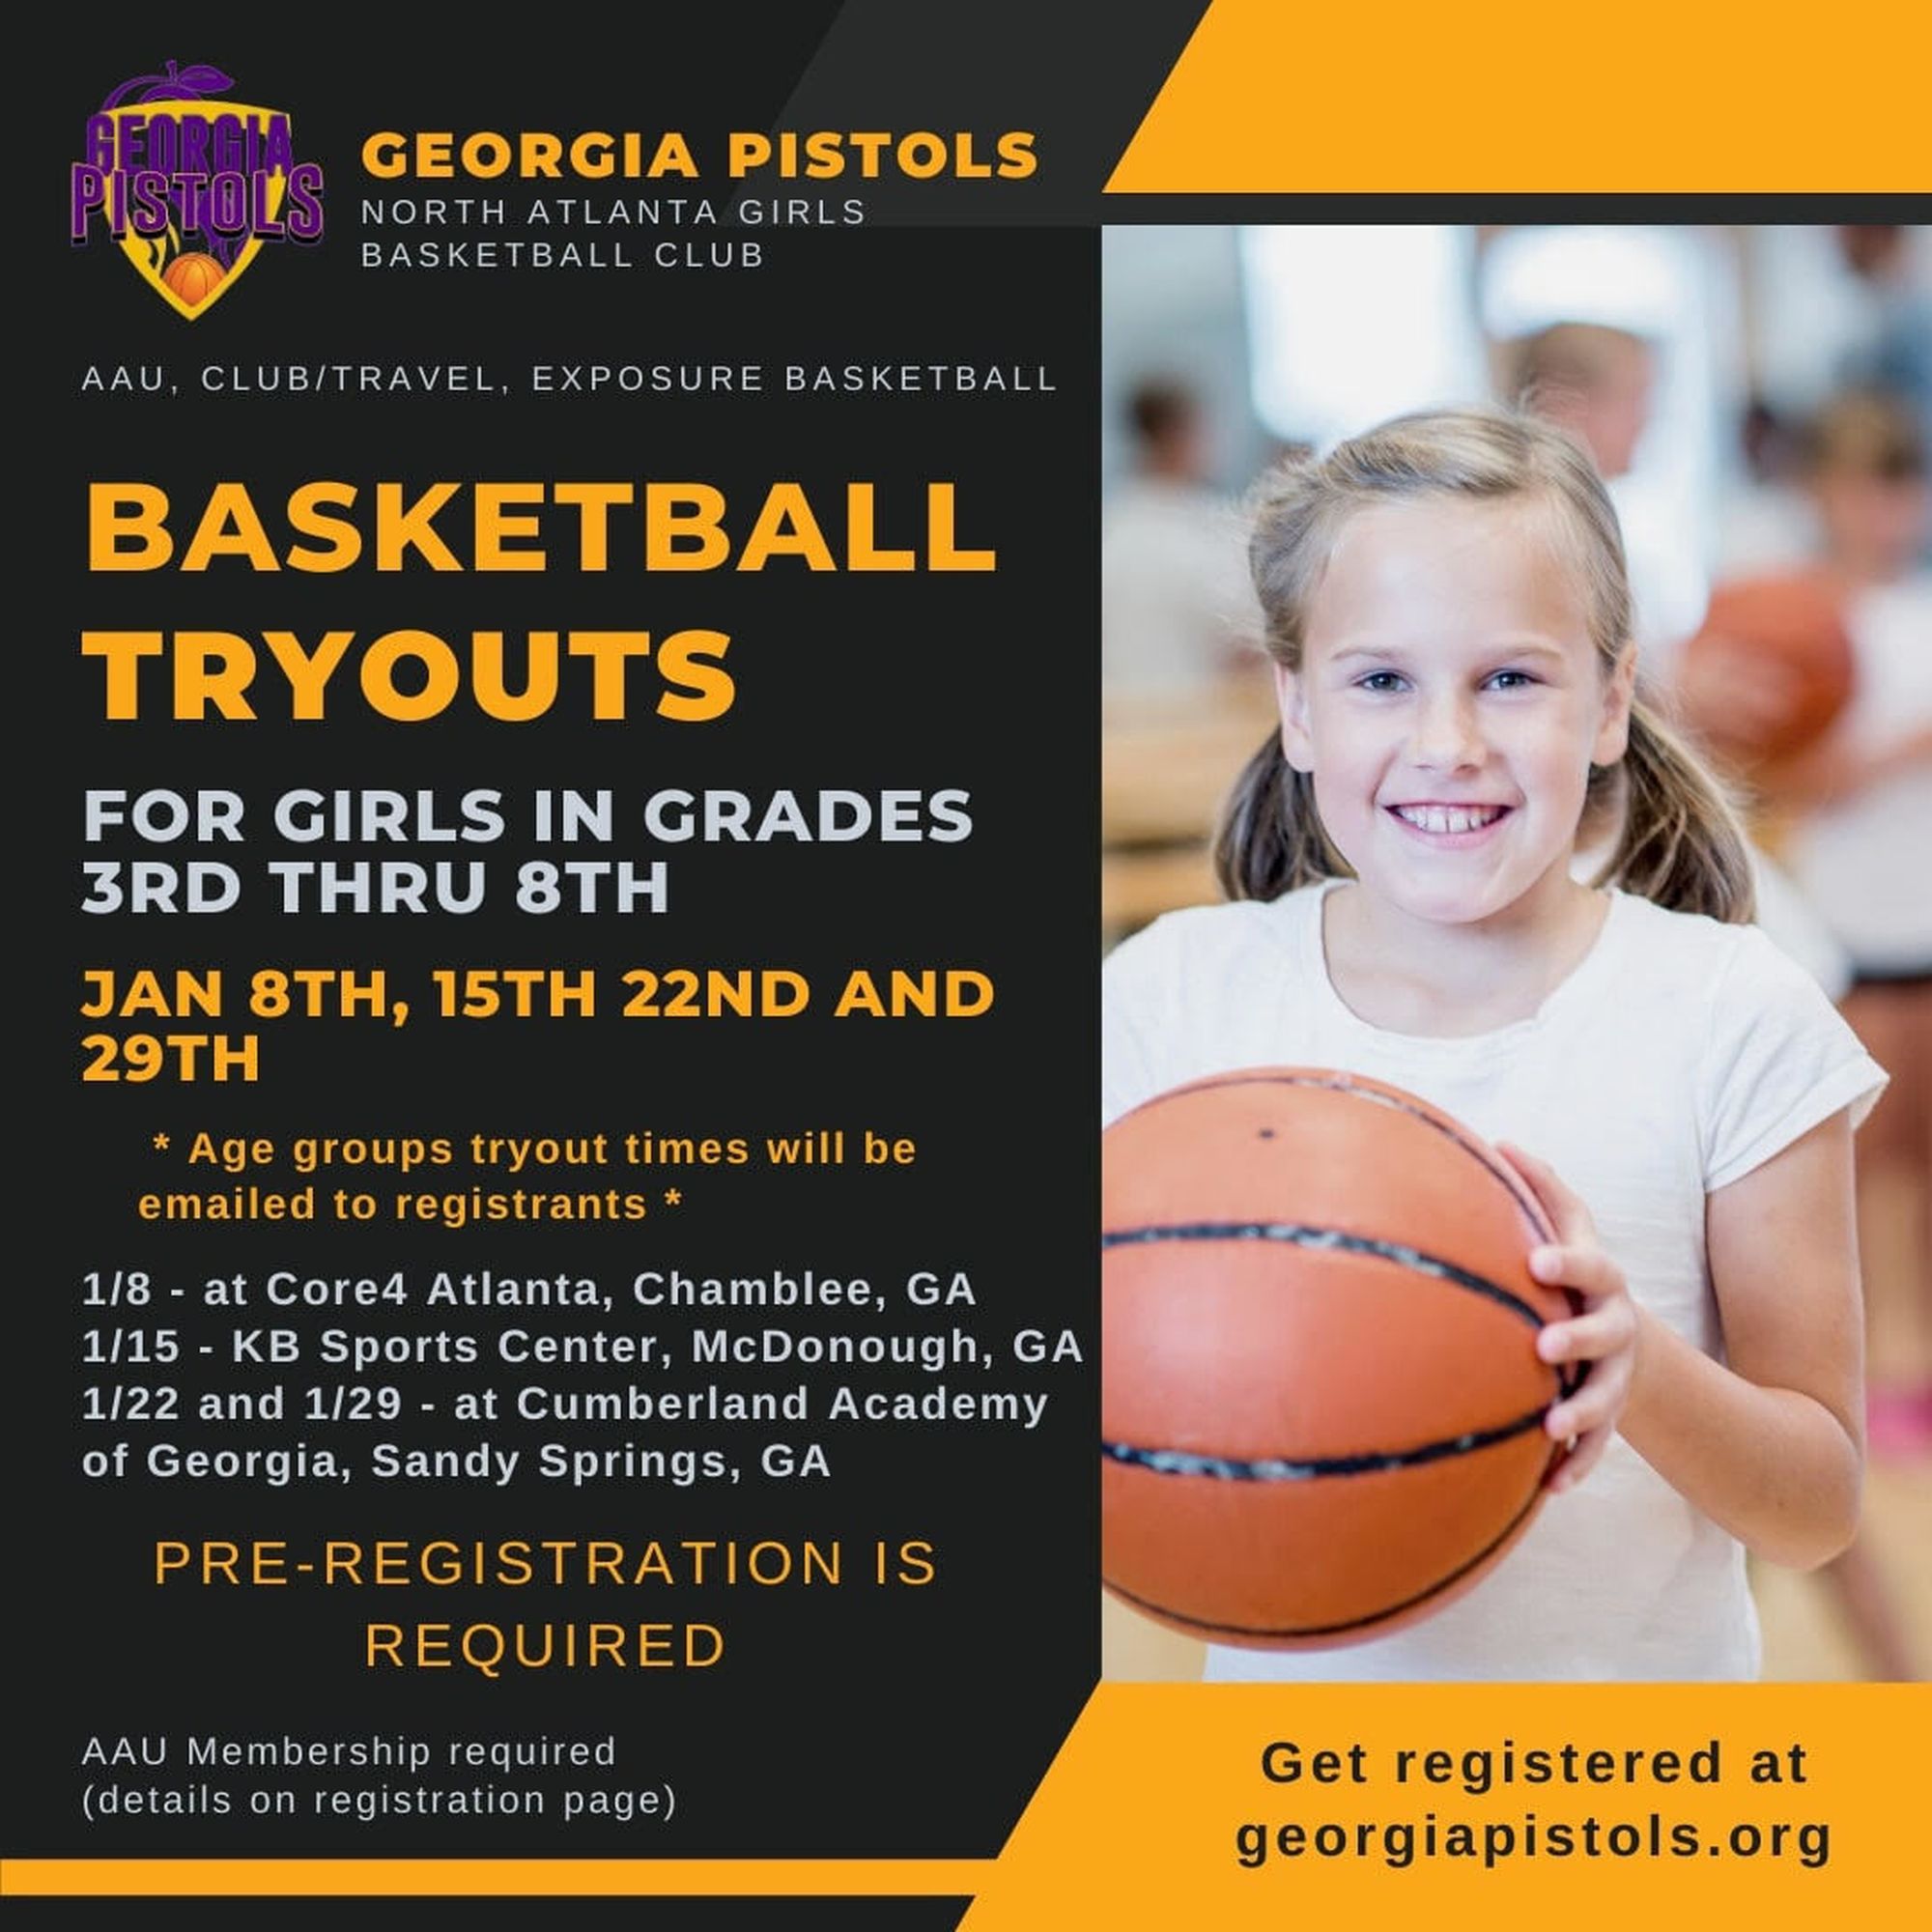 Georgia Pistols Girls Basketball, Atlanta, Georgia, United States